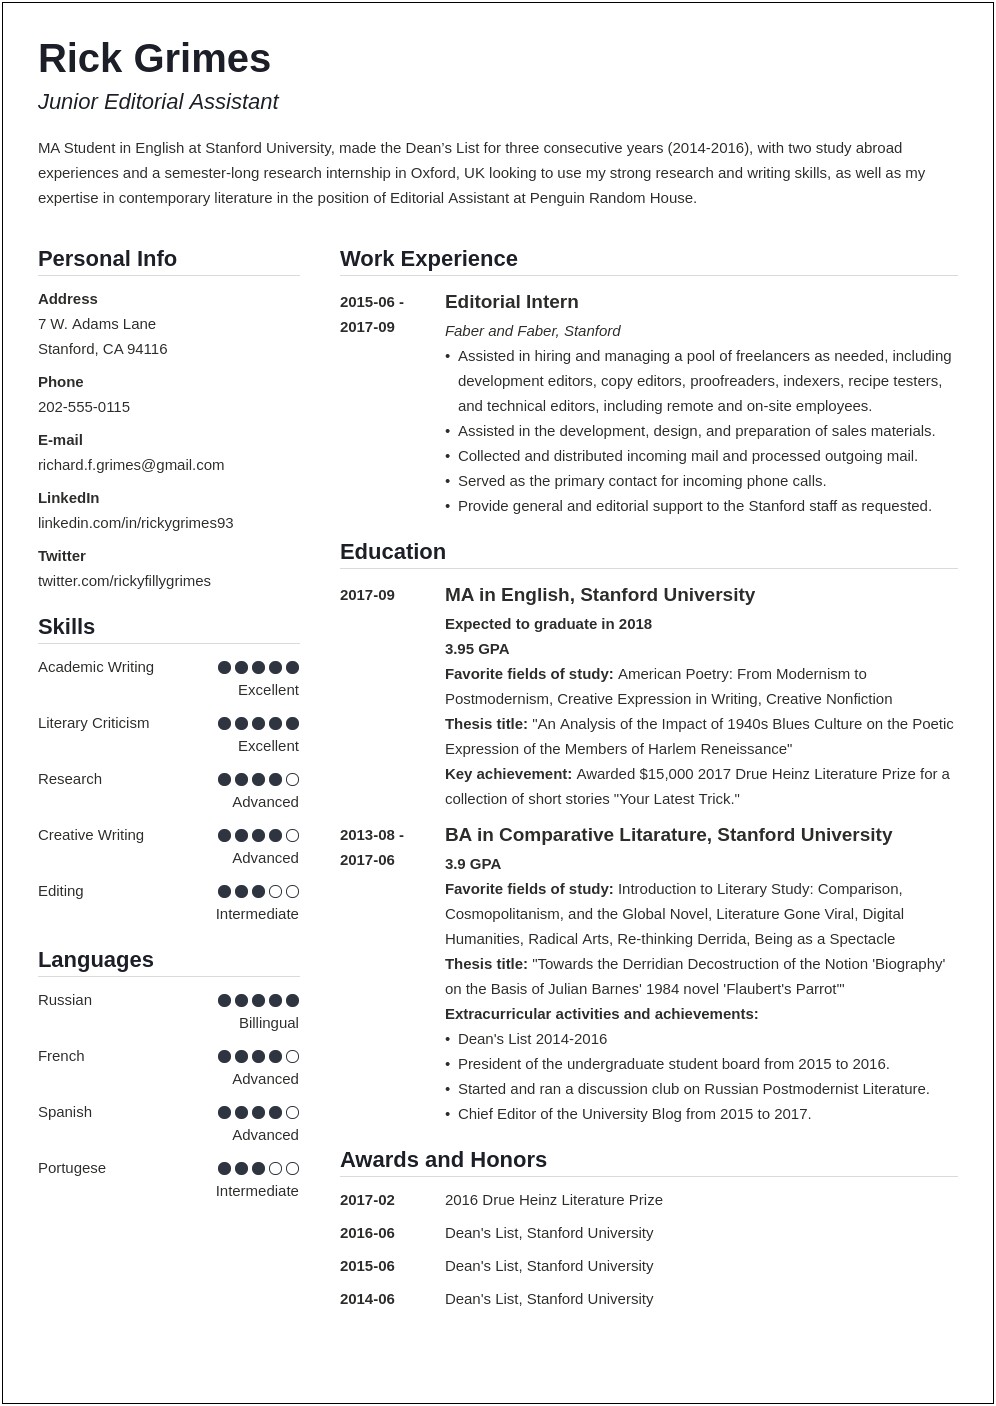 Psu Alumni Job Database Resume